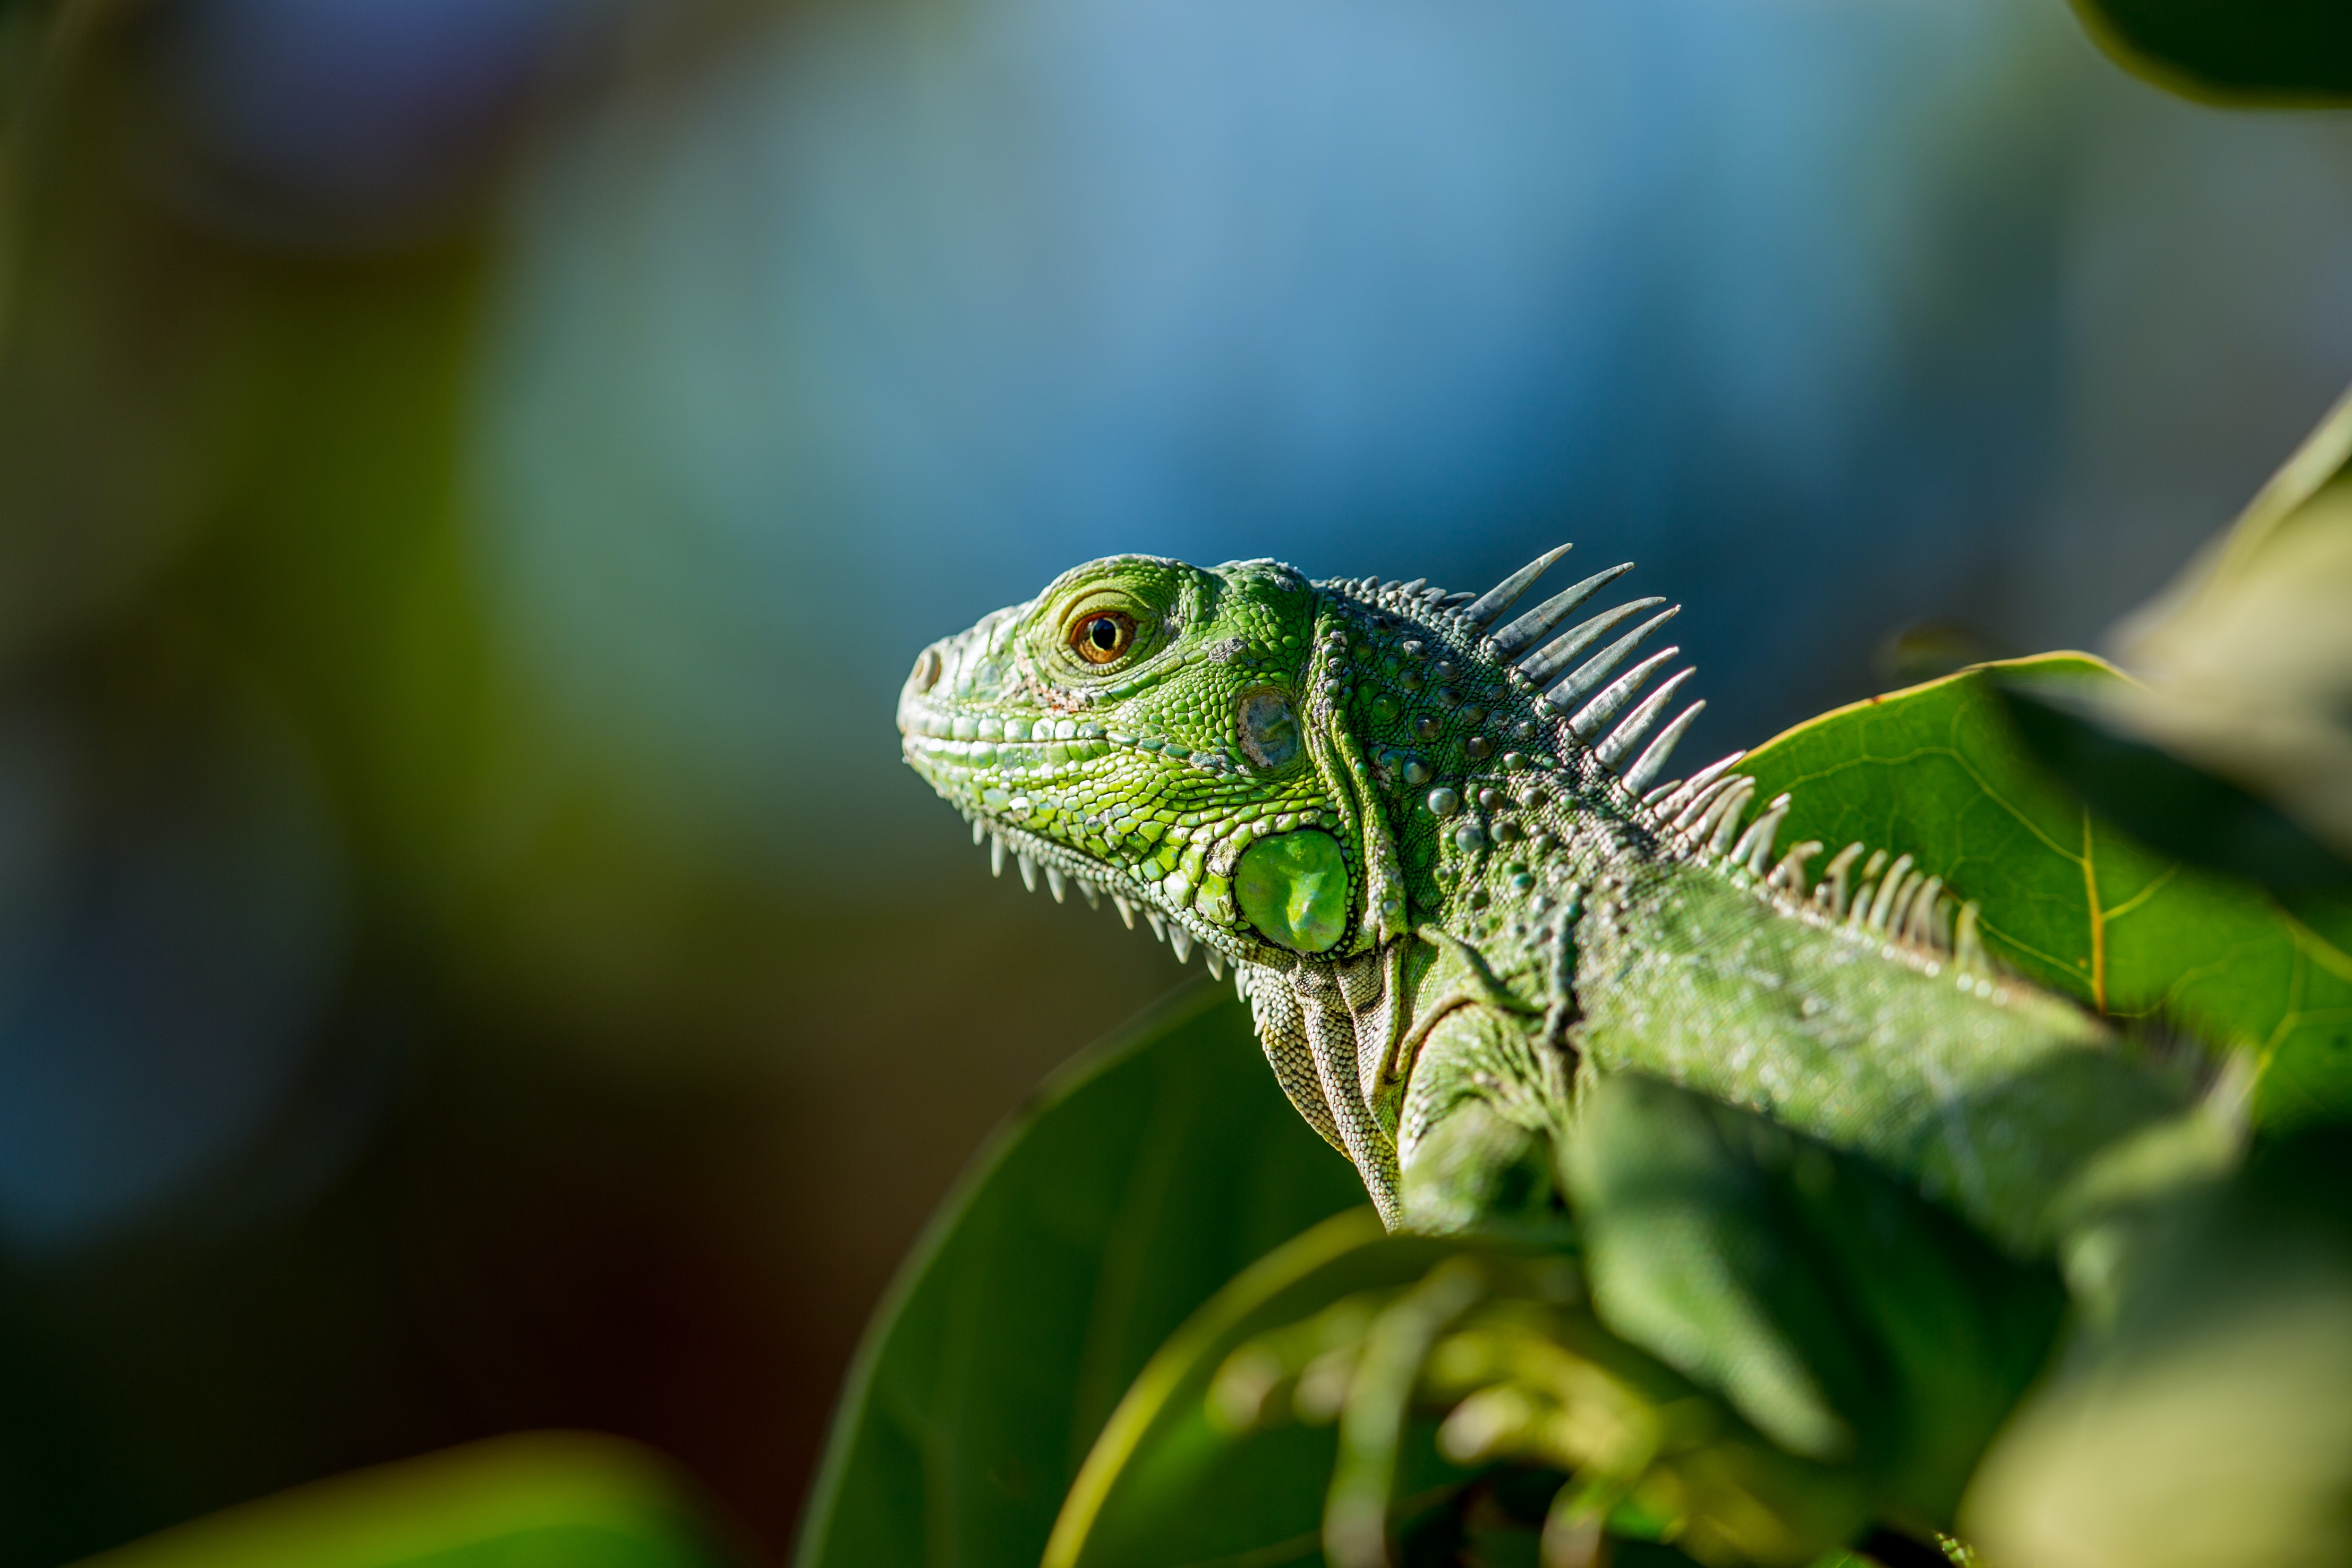 General 4428x2952 iguana animals blurry background nature leaves lizards closeup